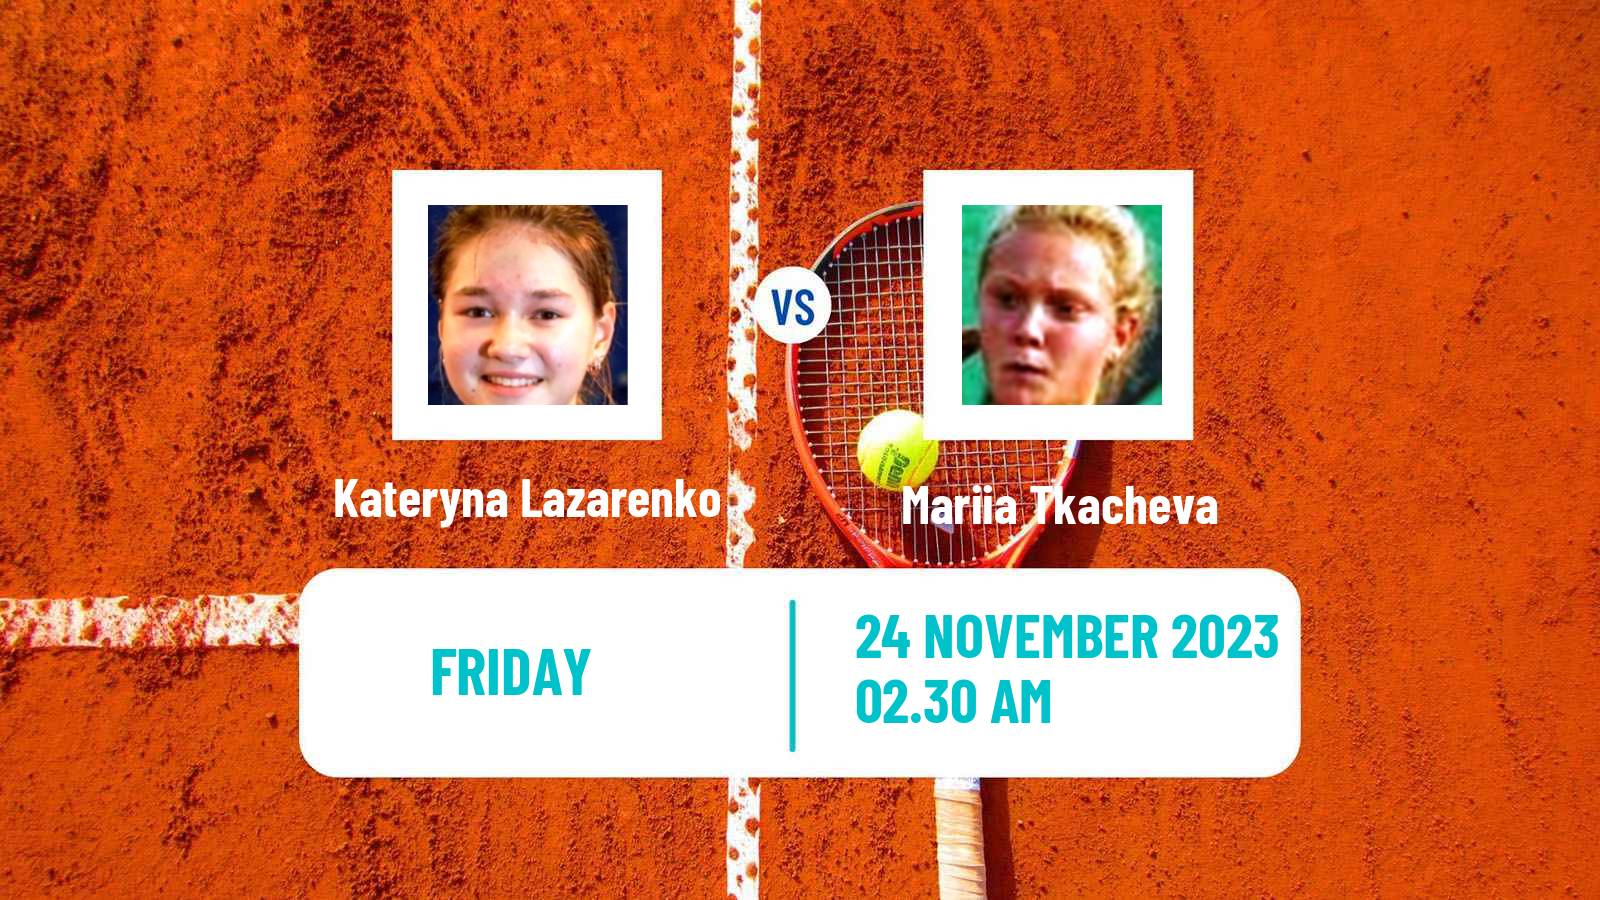 Tennis ITF W15 Sharm Elsheikh 19 Women Kateryna Lazarenko - Mariia Tkacheva